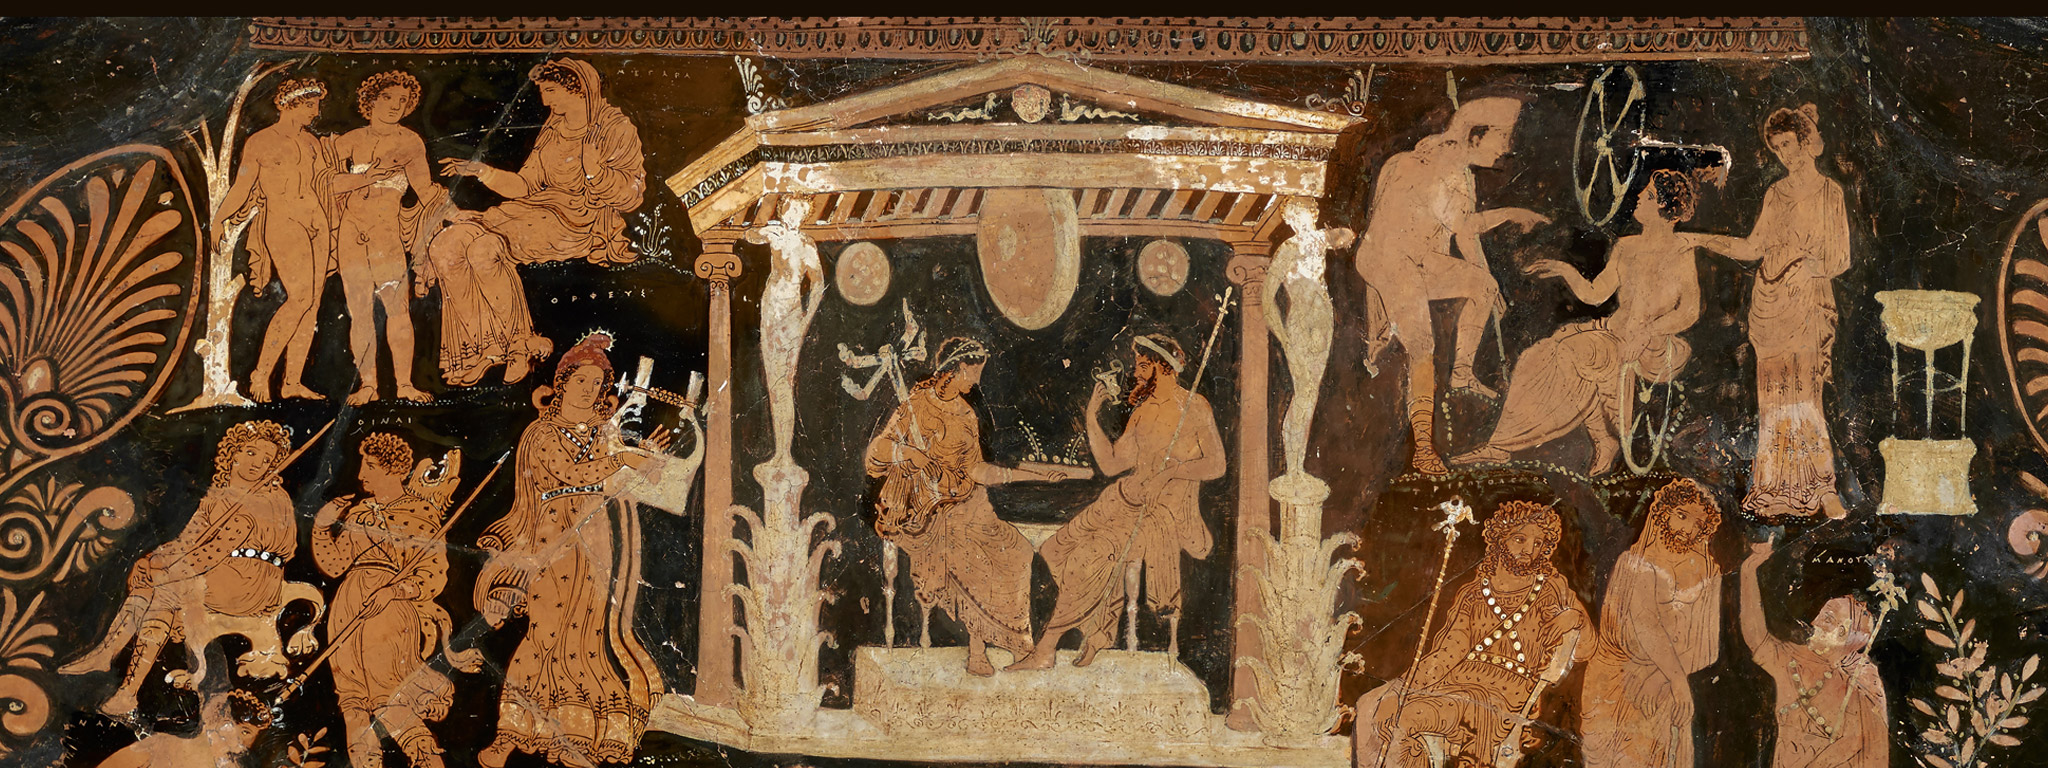 14 Journeys to the Underworld in Greek and Roman Mythology